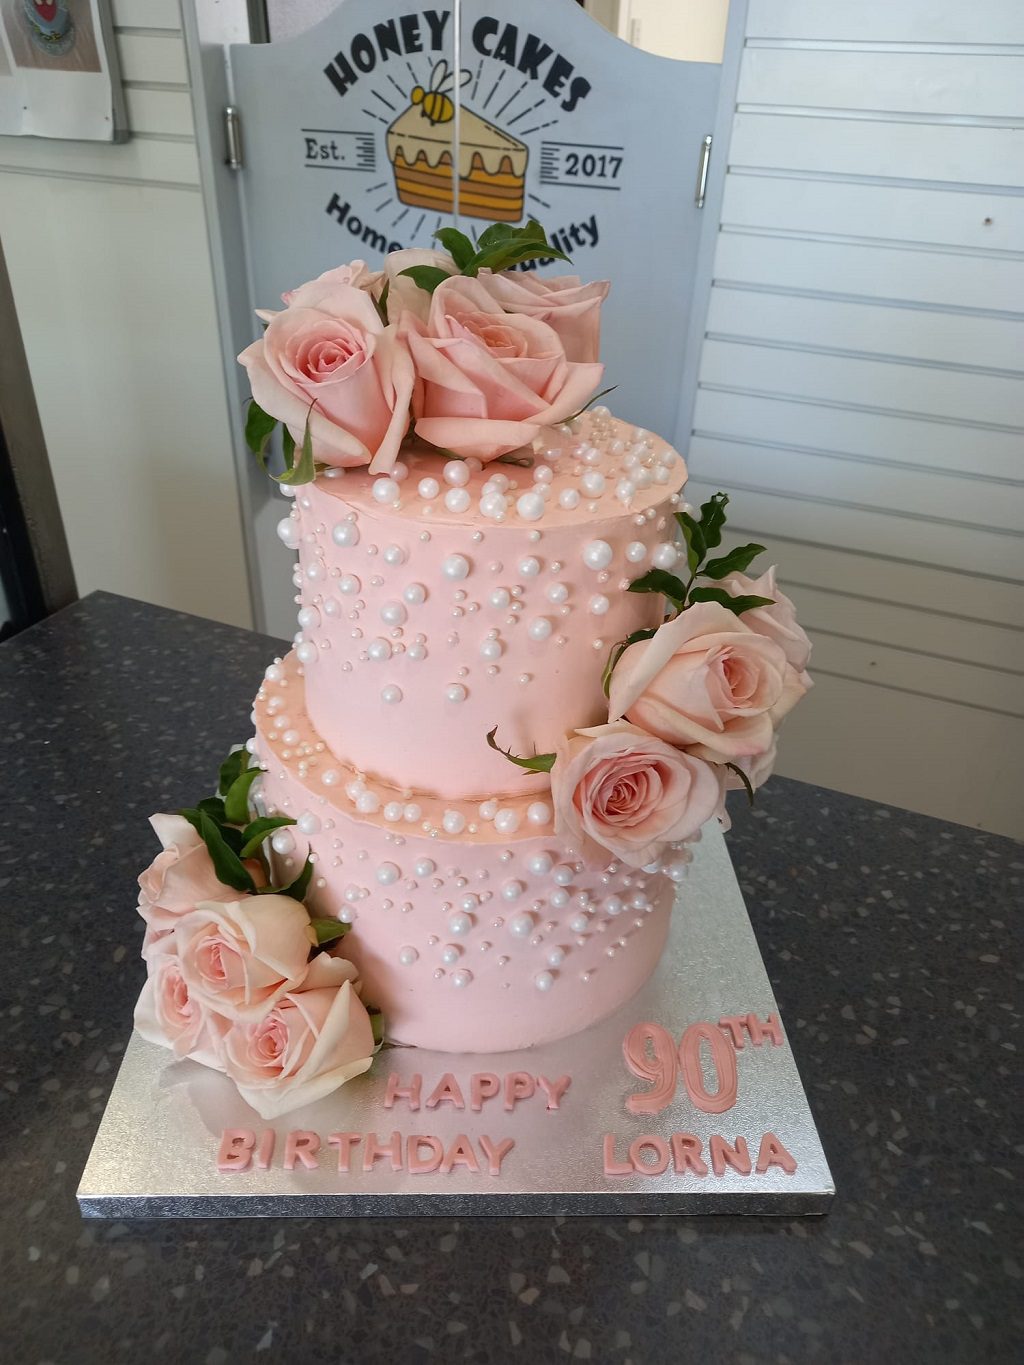 #RoseHoneyCake #Honey rose cake Honey rose Cake | हनी रोज केक - YouTube